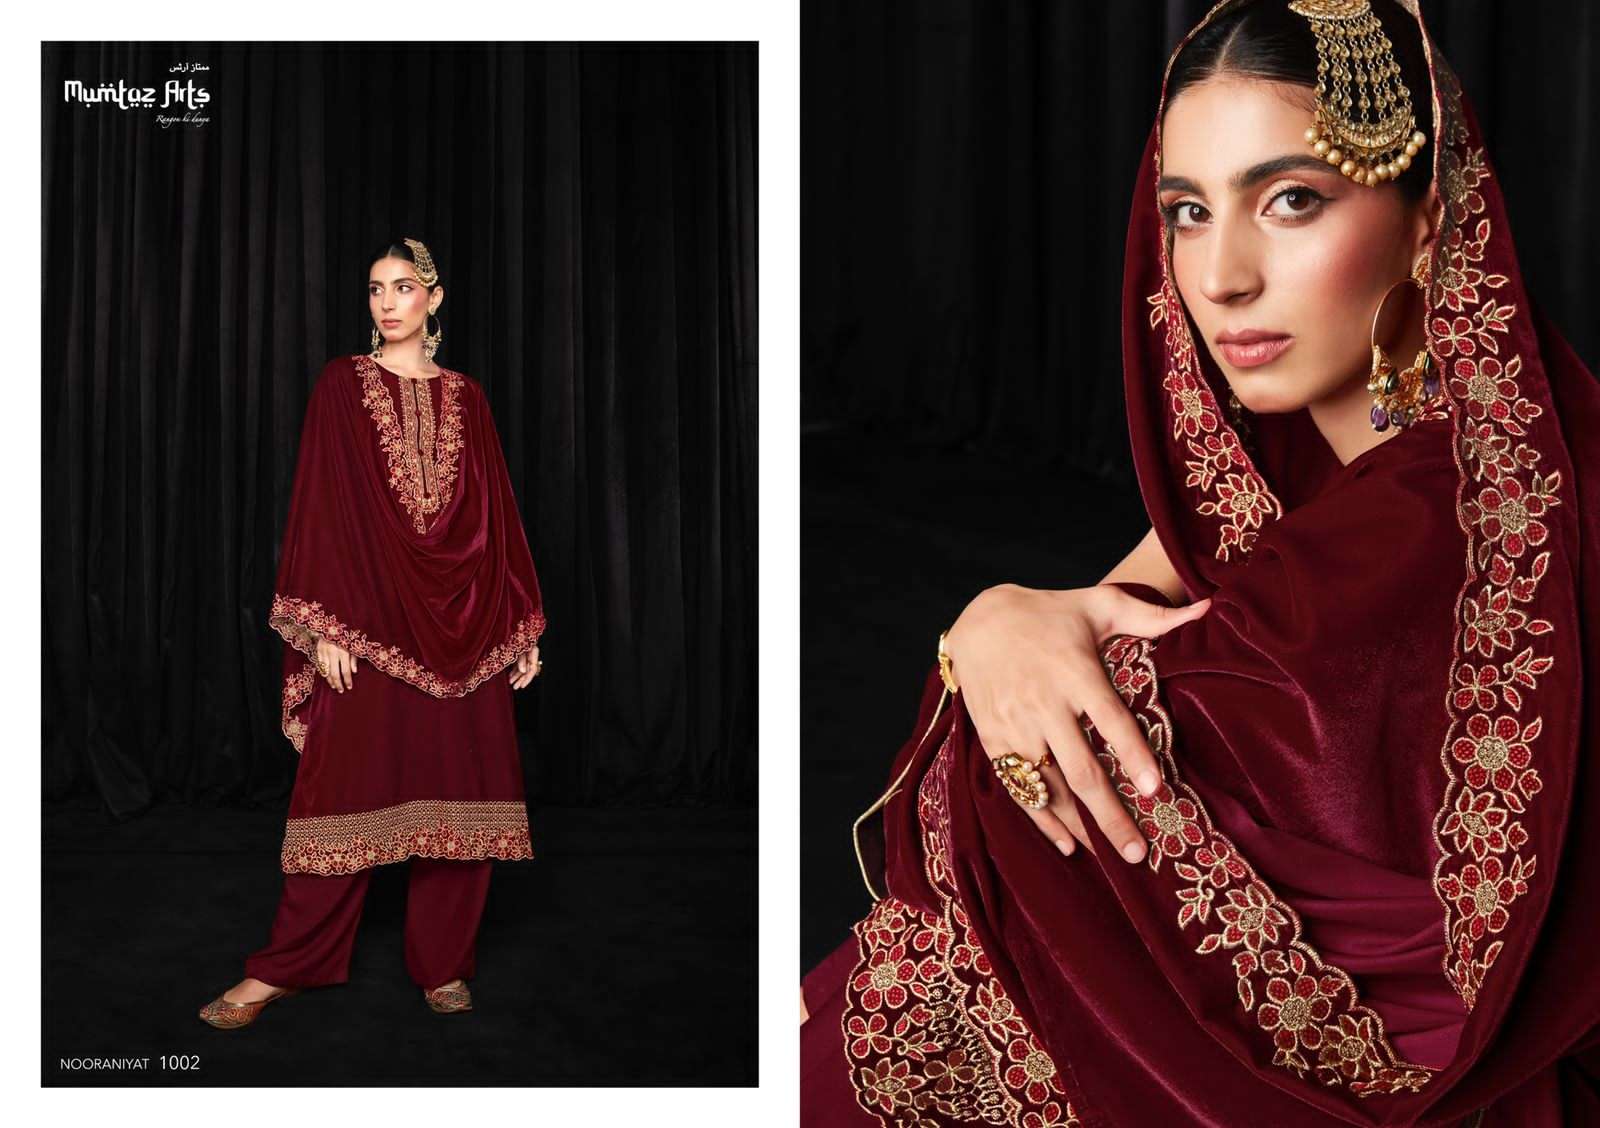 mumtaz arts by nooraniyat 1001-1007 series velvet designer party wear dress online shopping surat 